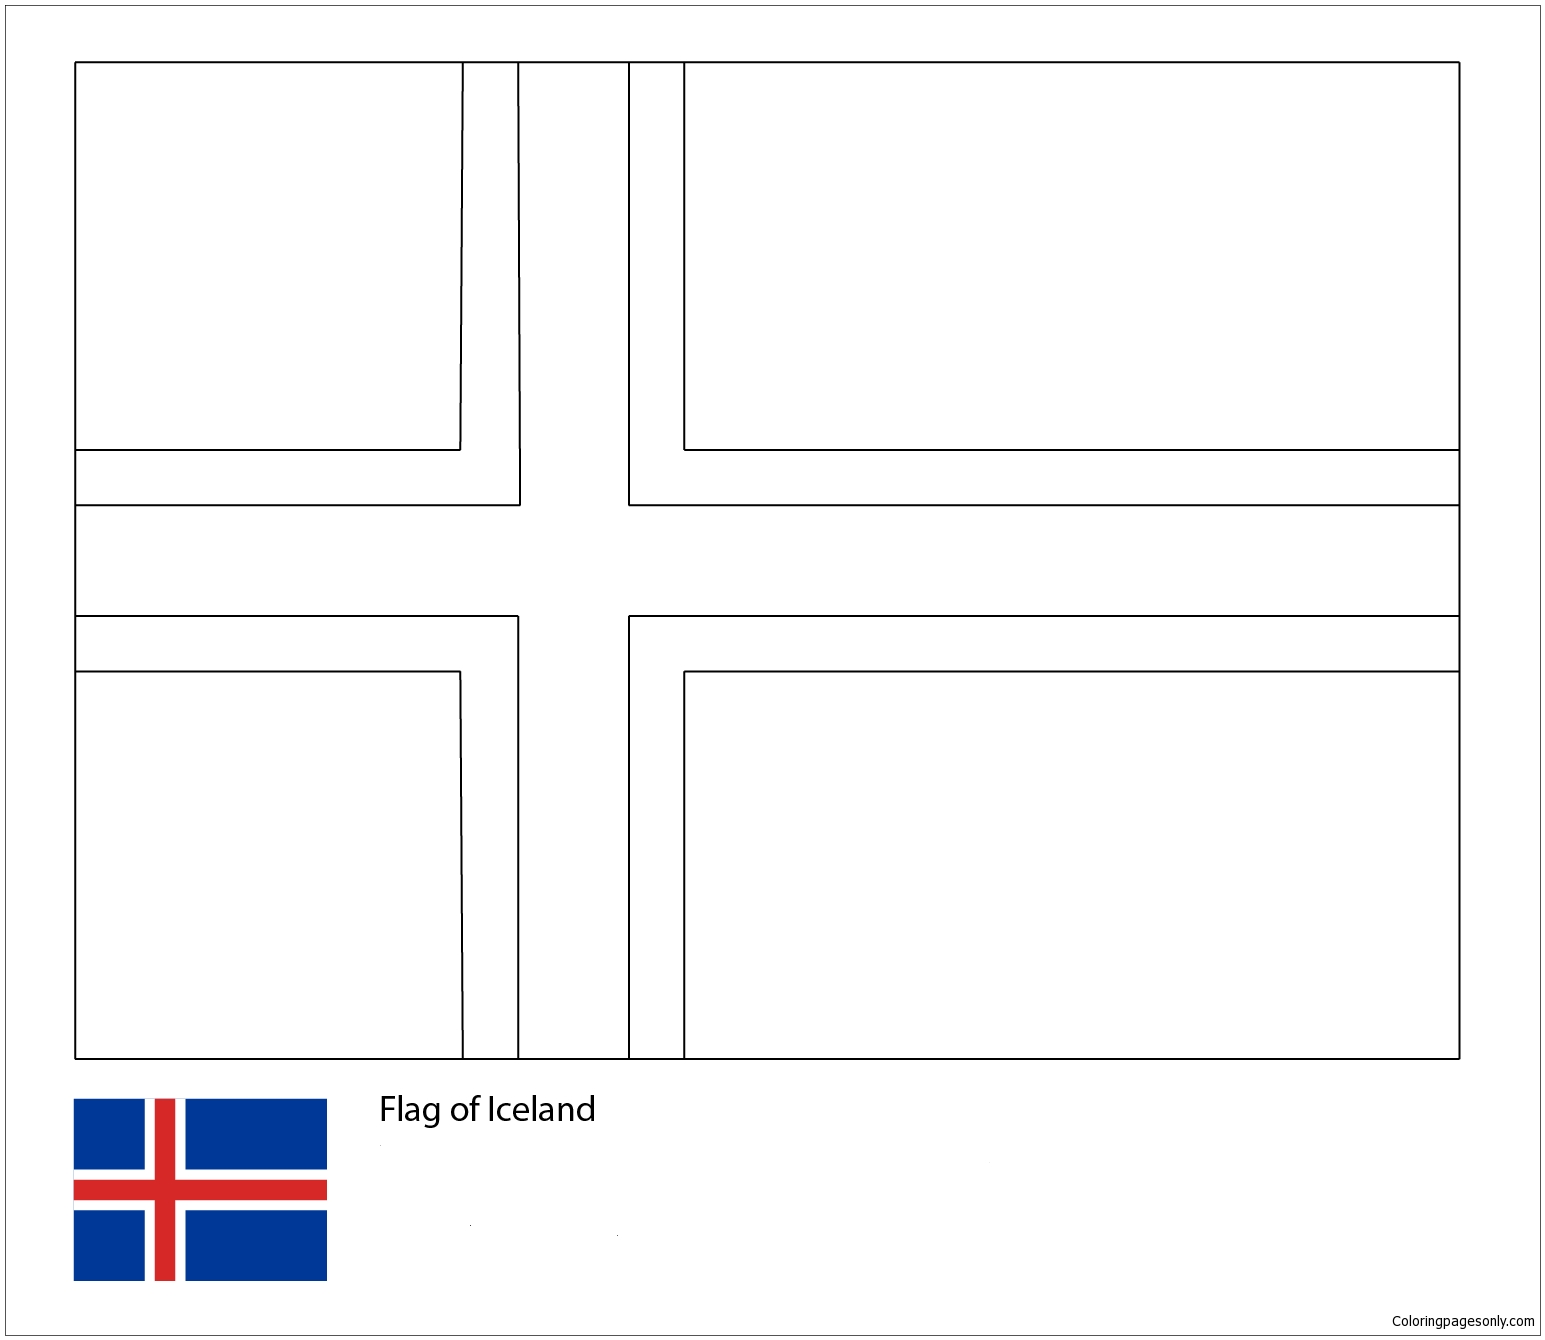 Флаг Исландии-ЧМ-2018 из флагов ЧМ-2018